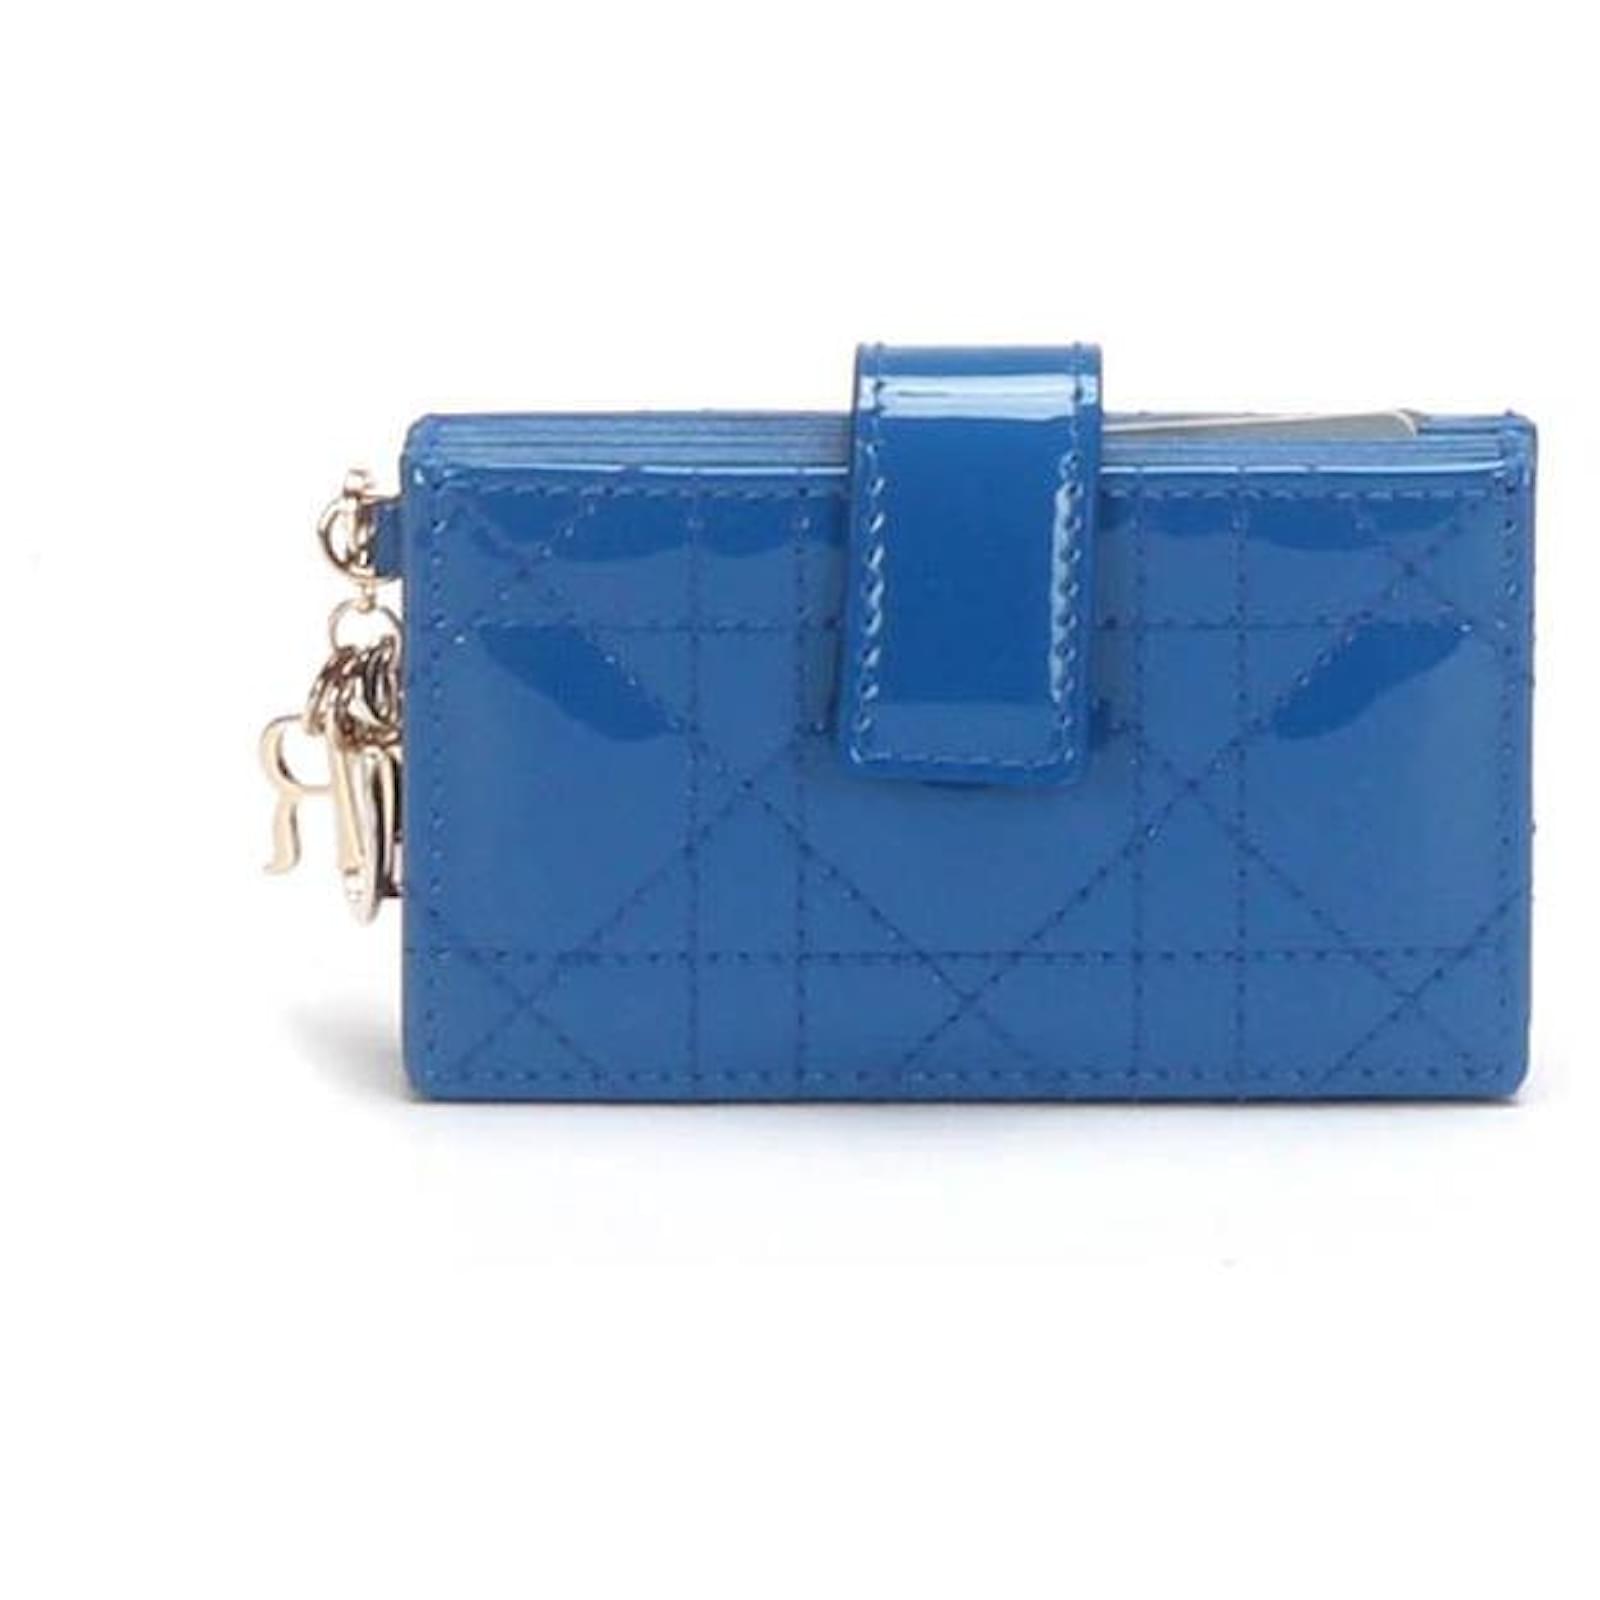 Christian Dior Denim Blue Patent Leather 5 Pocket Card Case